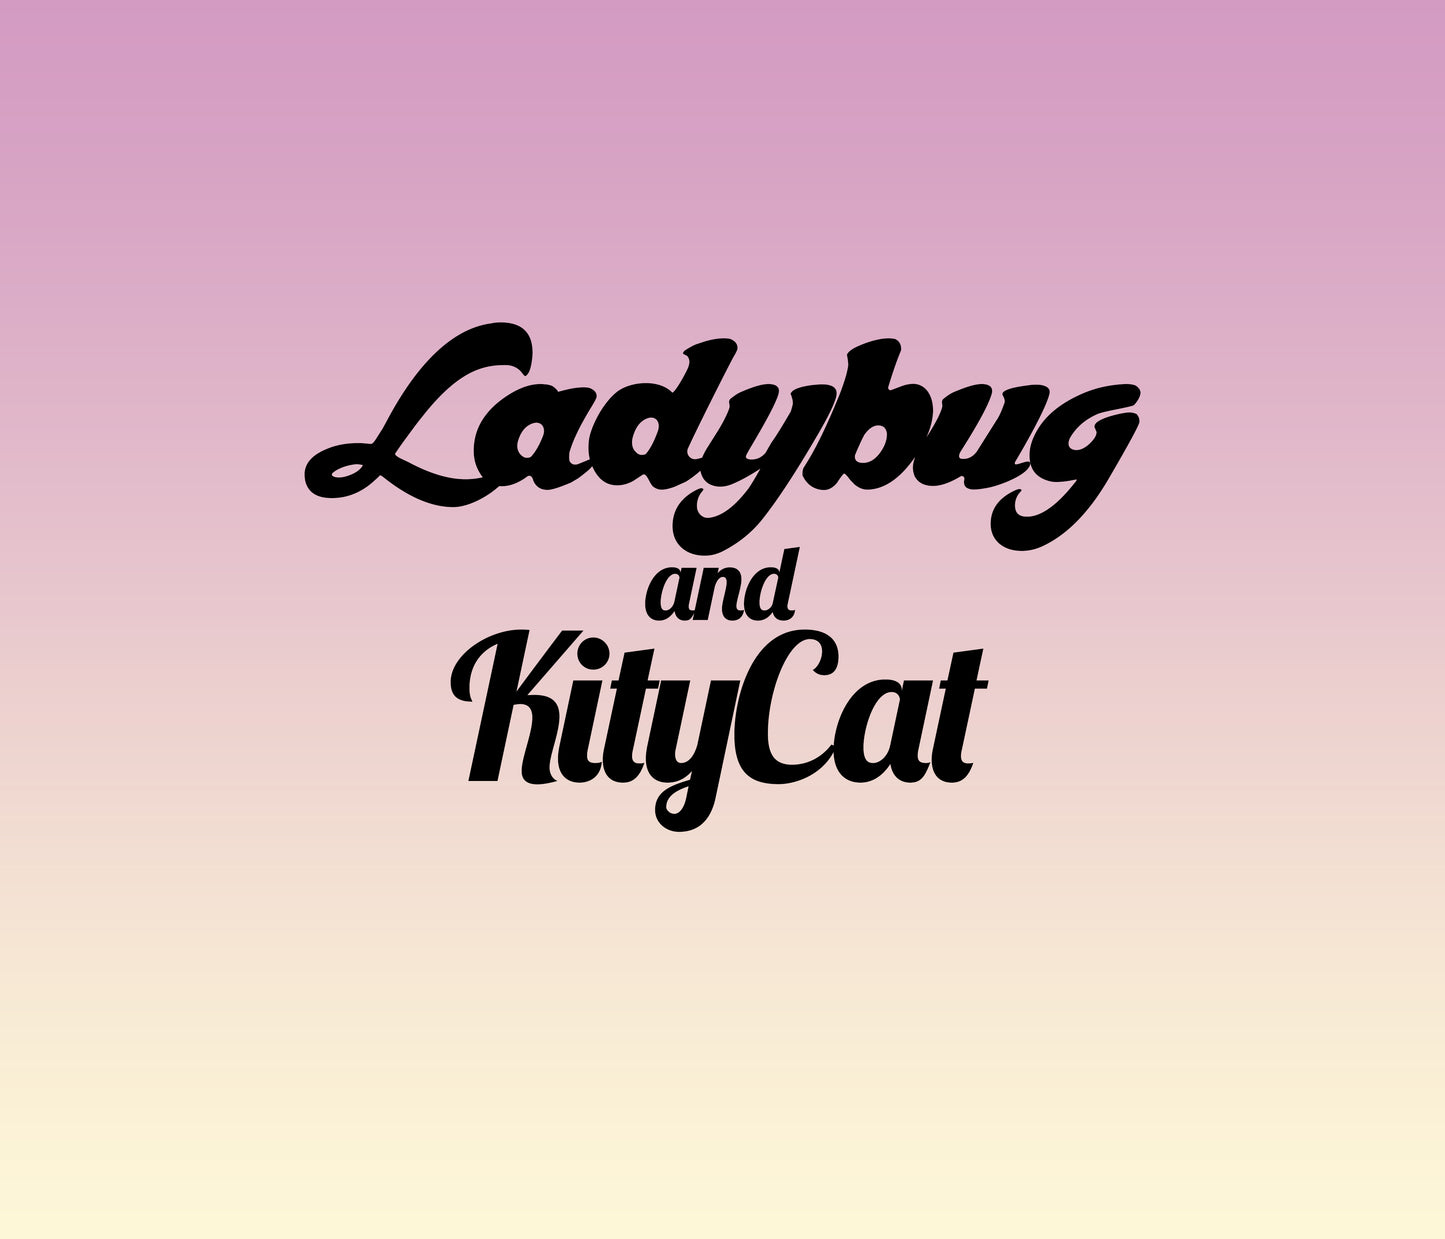 Ladybug and Cat Noir Fonts